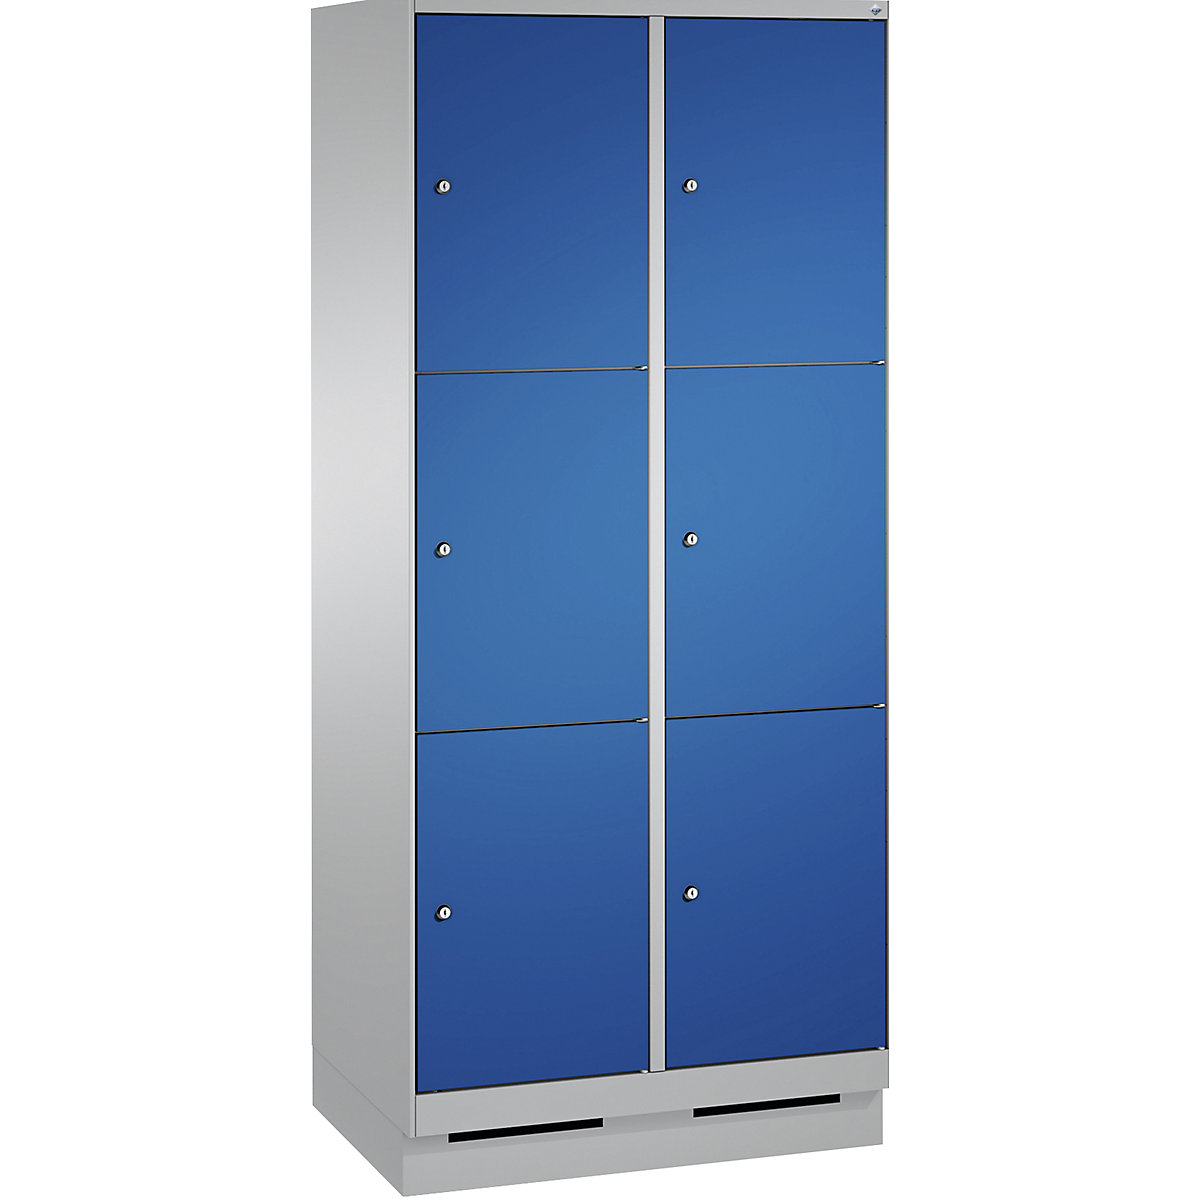 EVOLO locker unit, with plinth – C+P, 2 compartments, 3 shelf compartments each, compartment width 400 mm, white aluminium / gentian blue-6